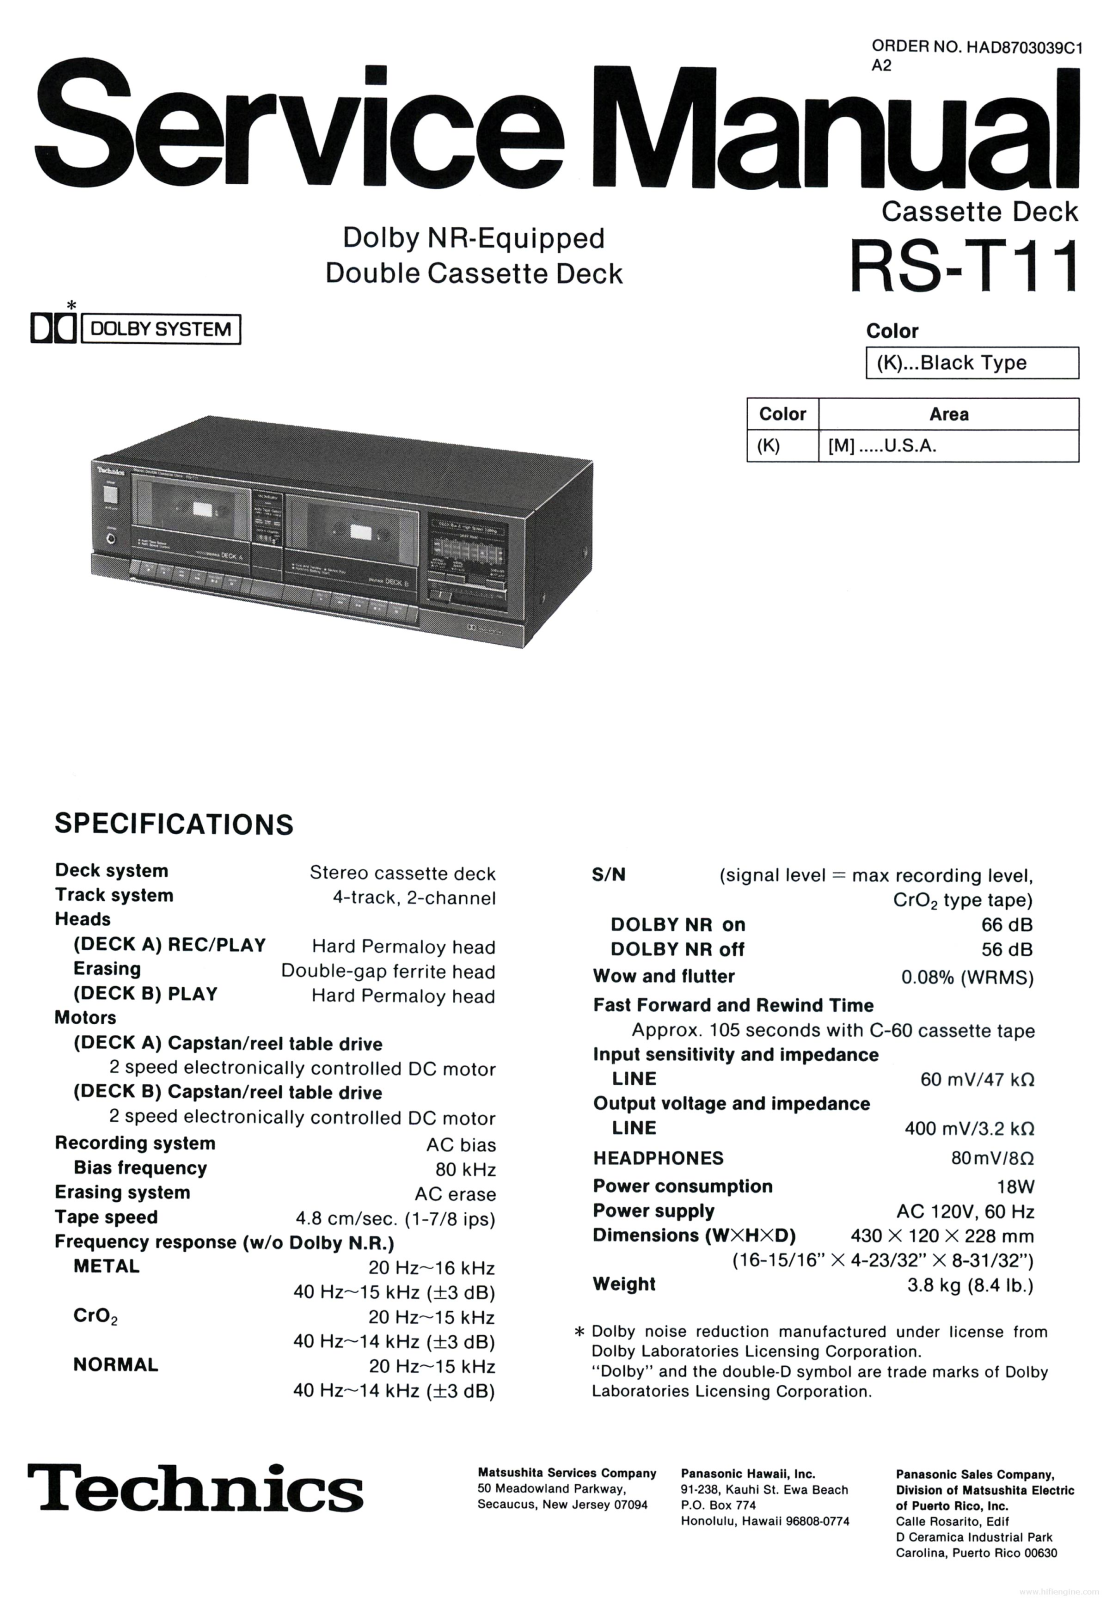 Technics rs-t11 Service Manual